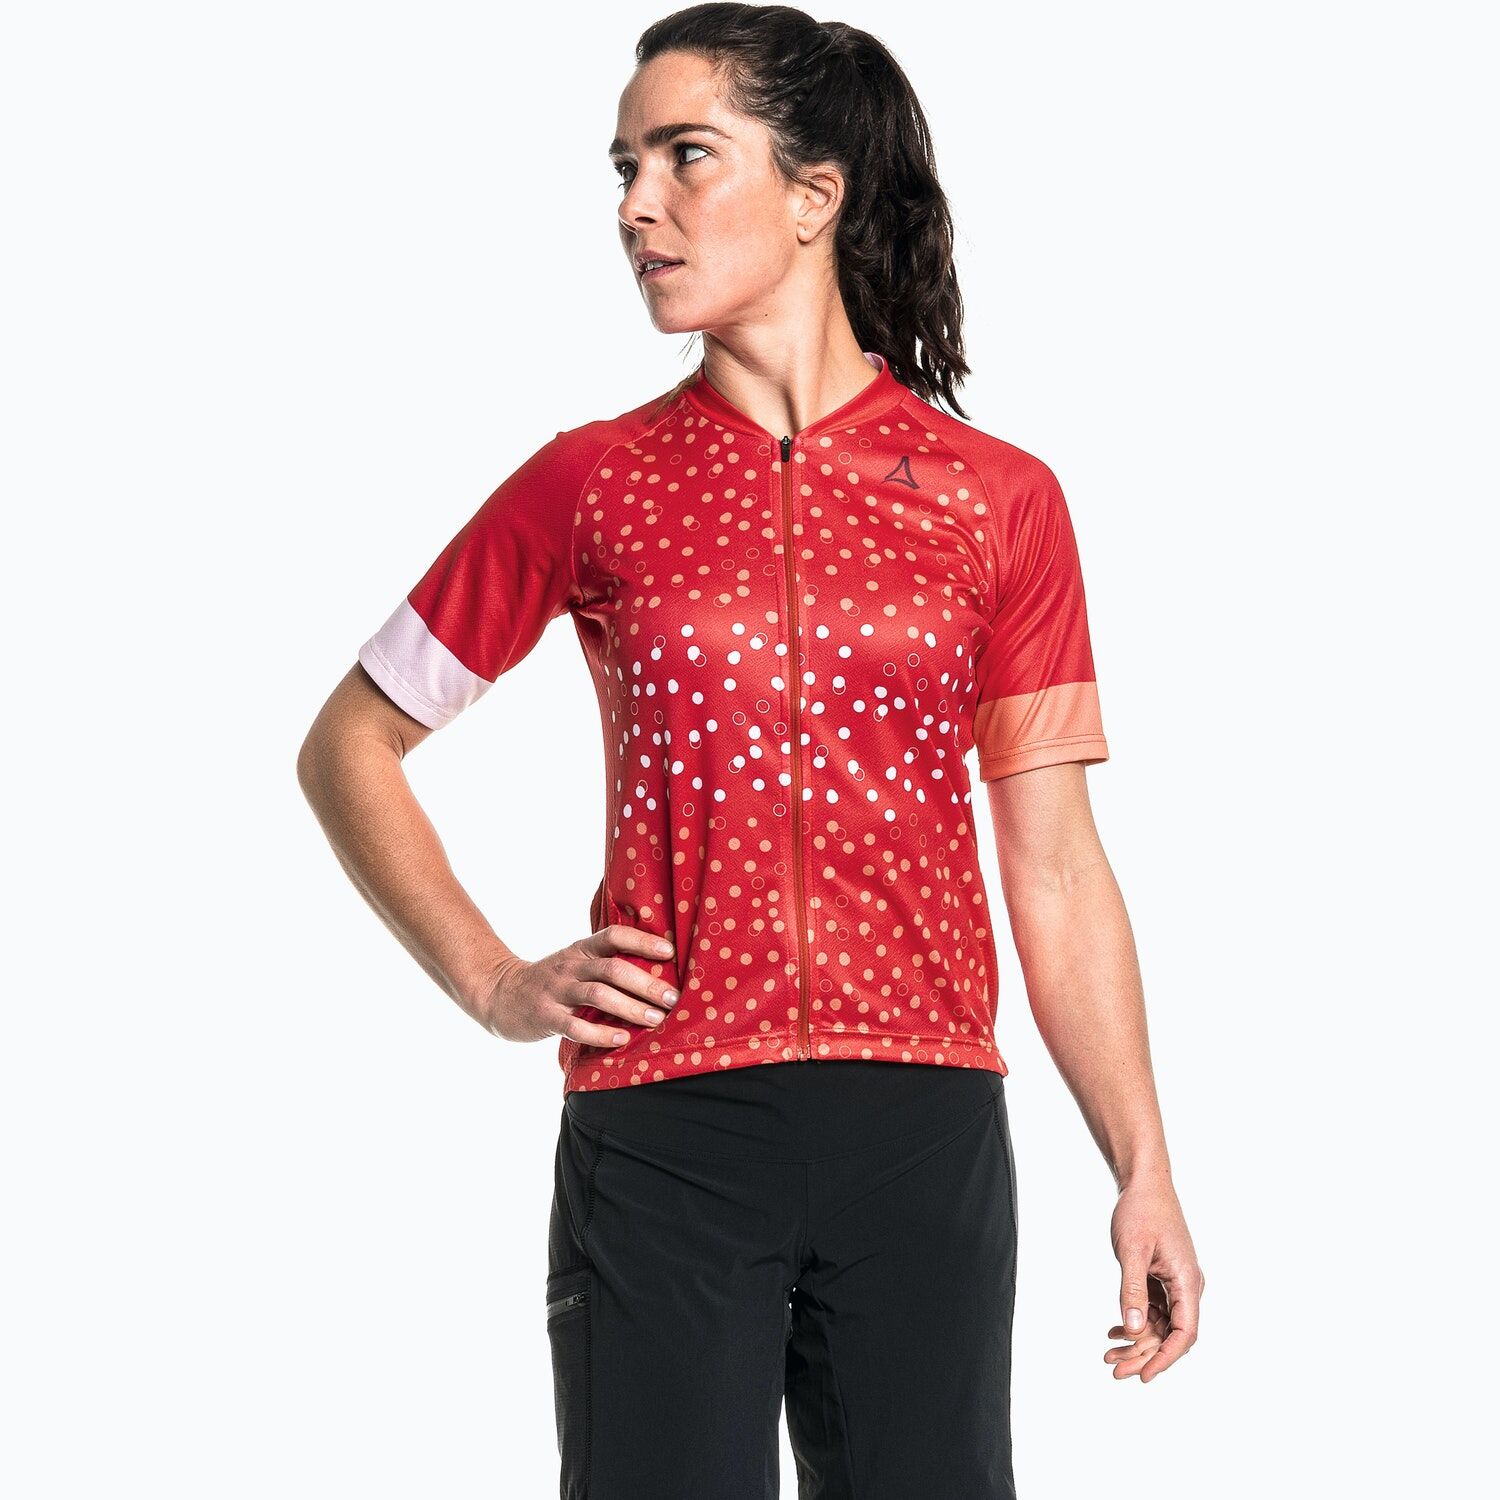 Schöffel Shirt Vertine - Maillot ciclismo - Mujer